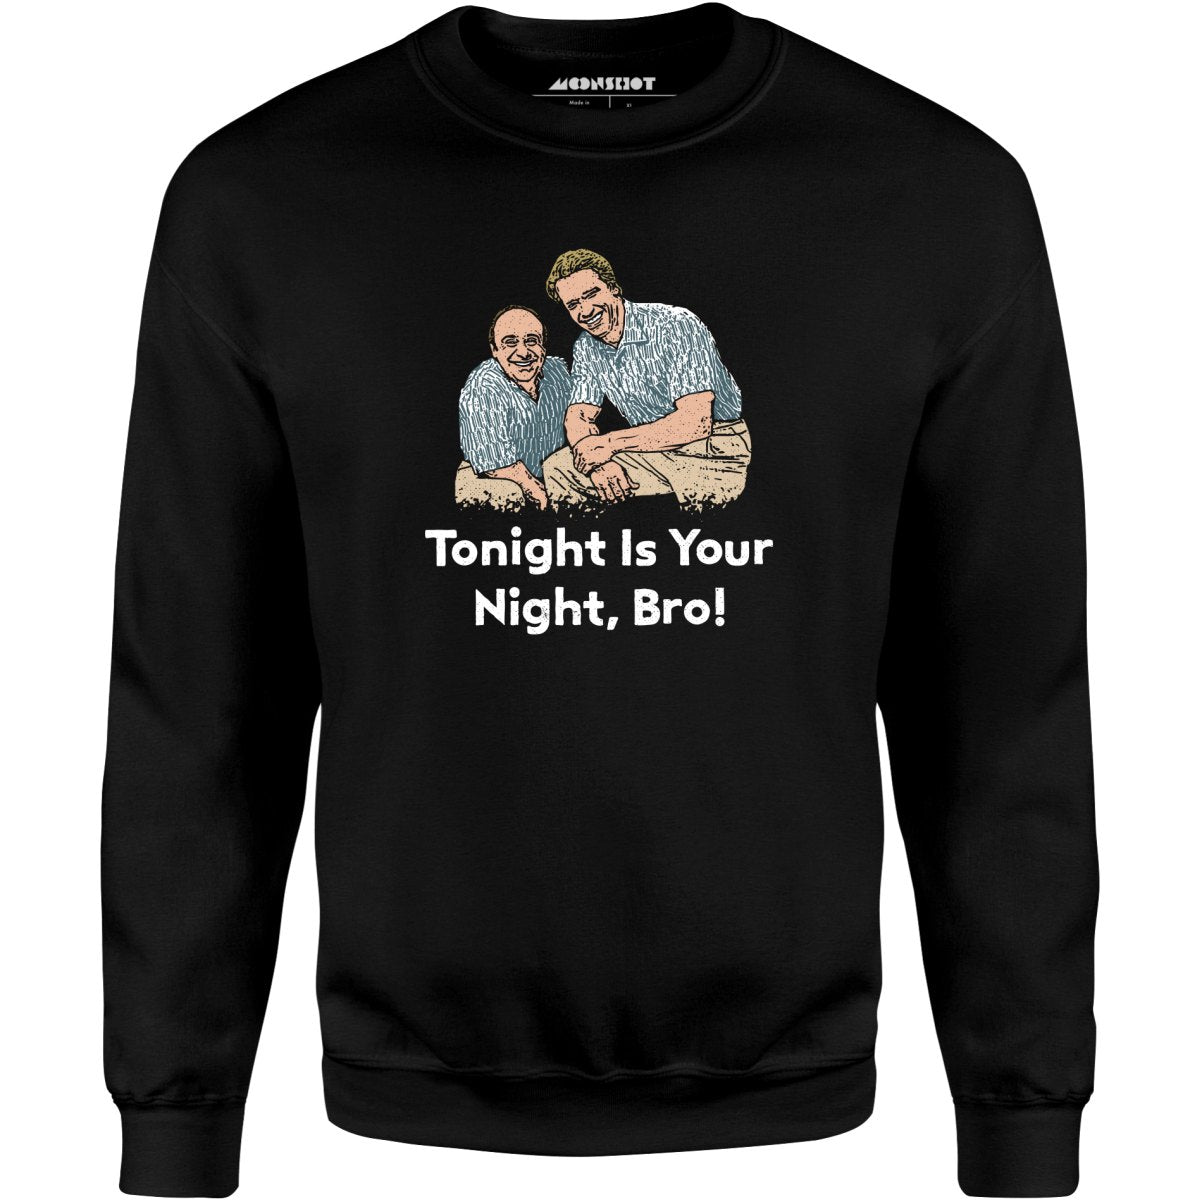 Tonight is Your Night, Bro! - Unisex Sweatshirt